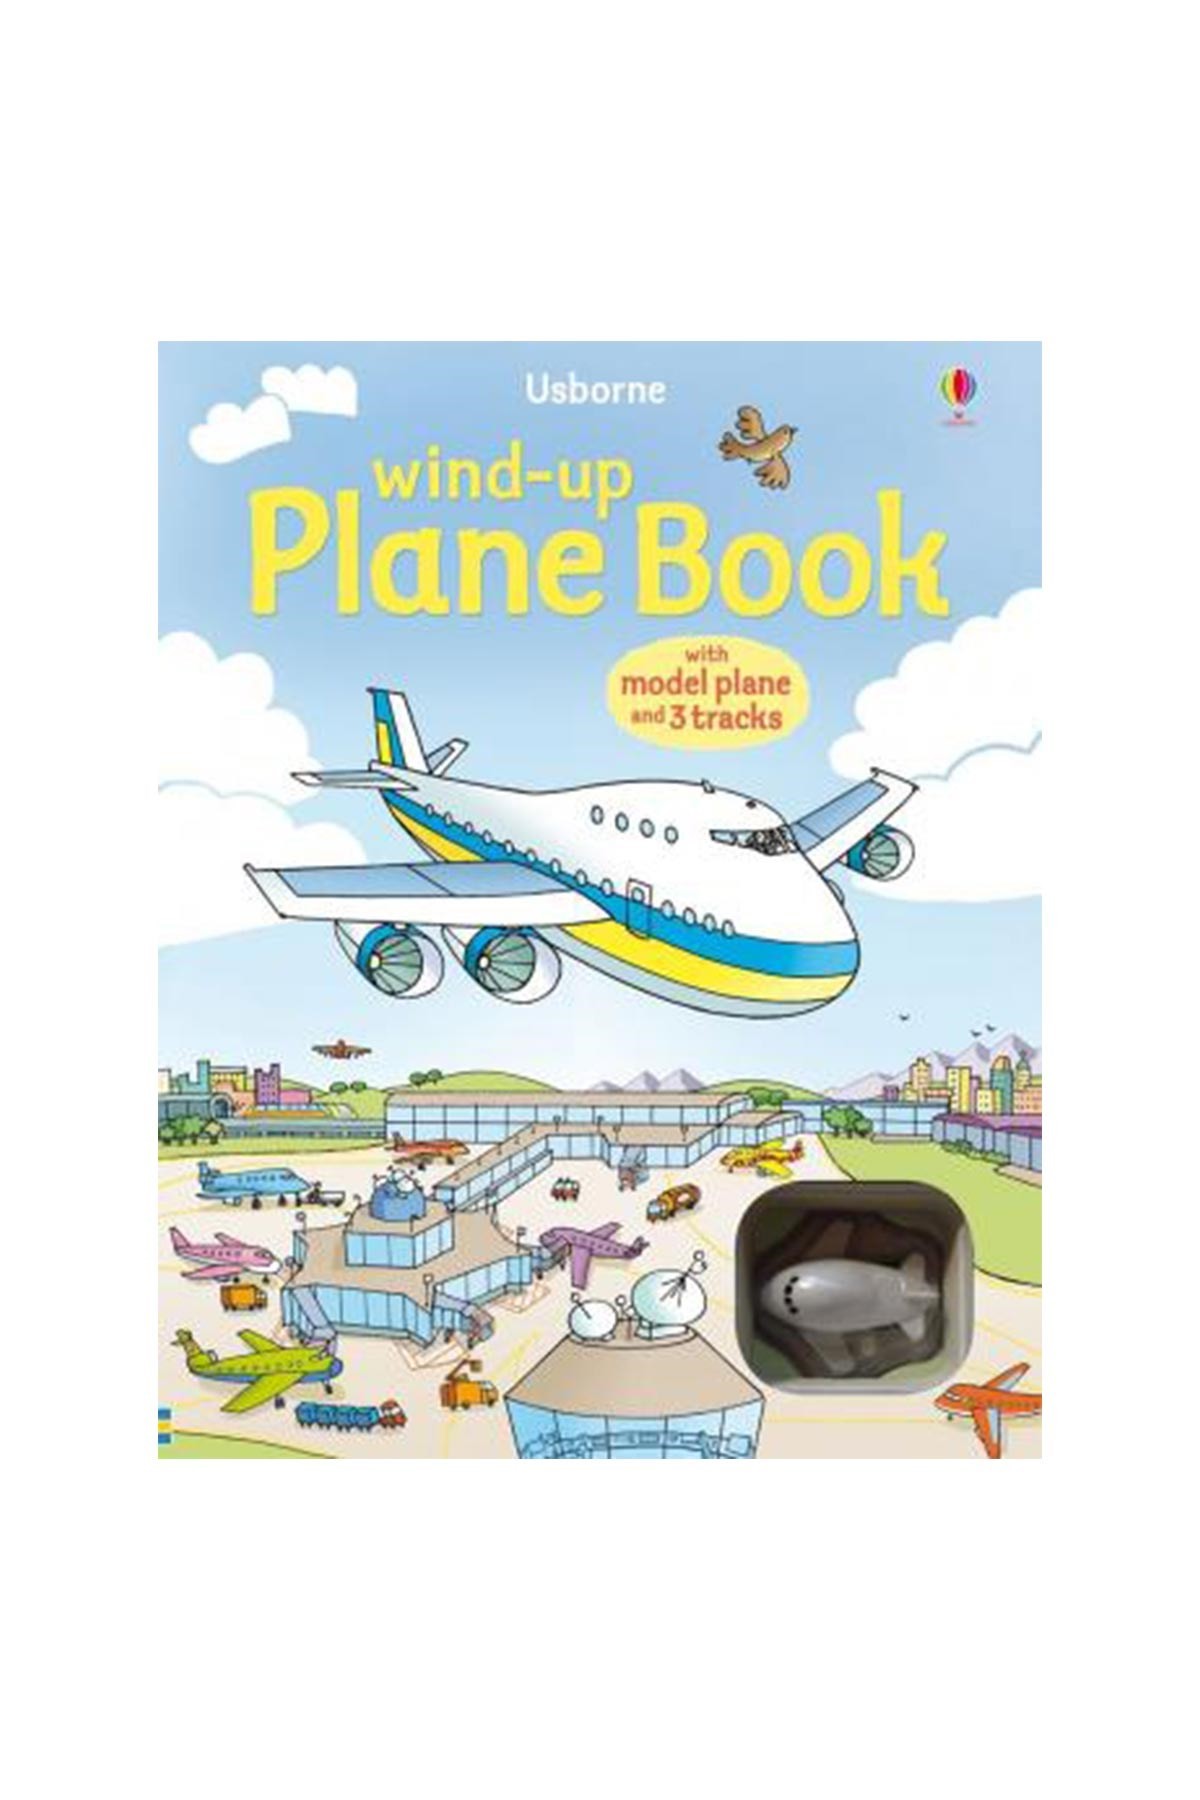 The Usborne Wind-Up Plane Book